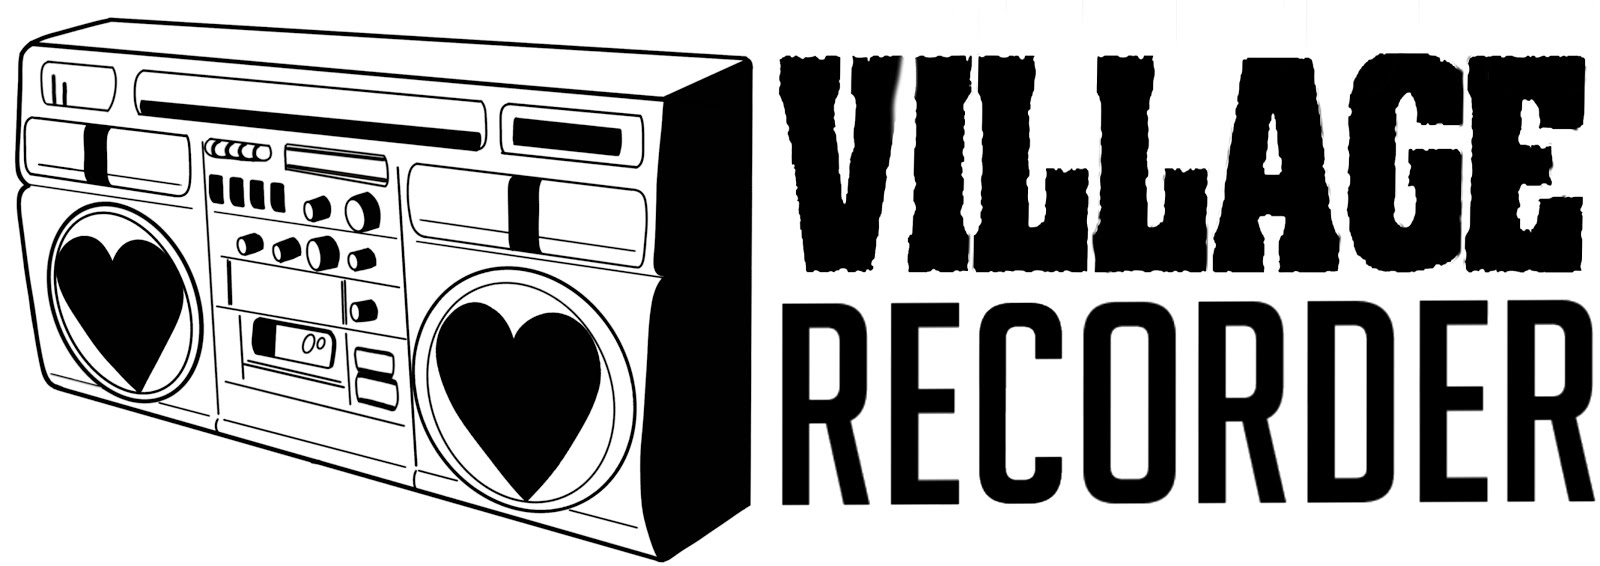 Village Recorder